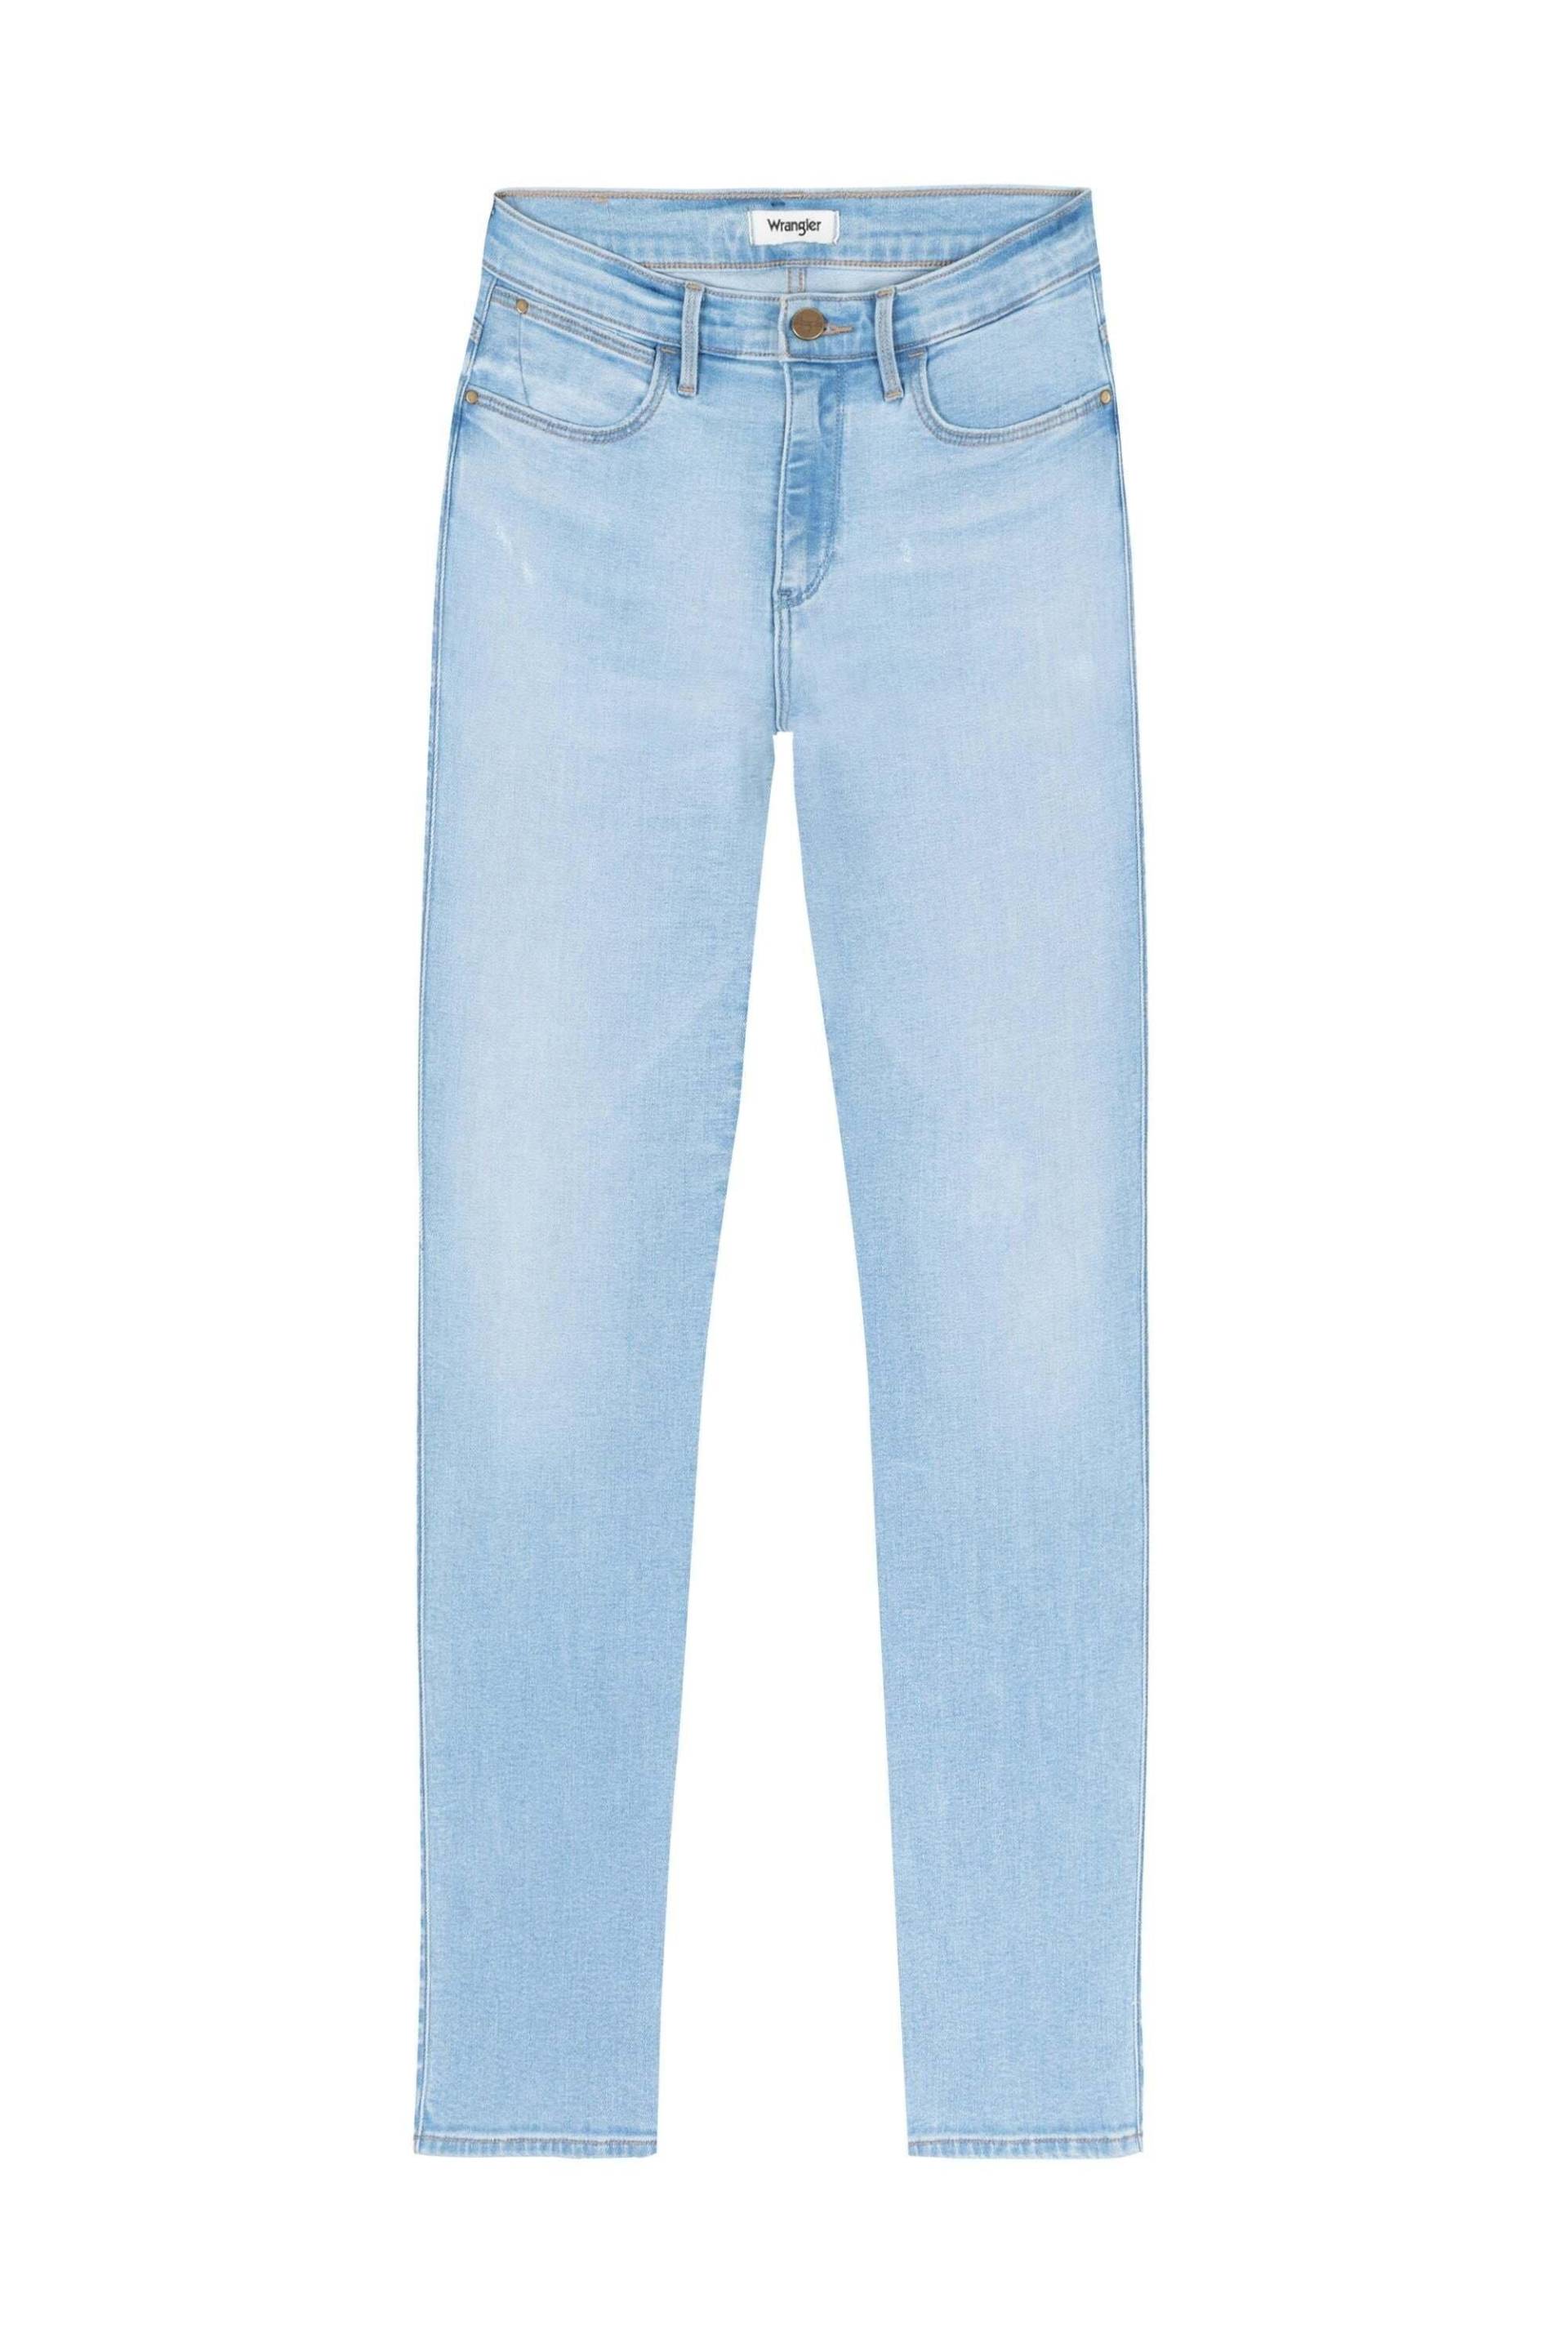 Jeans High Skinny Damen Blau L32/W27 von Wrangler